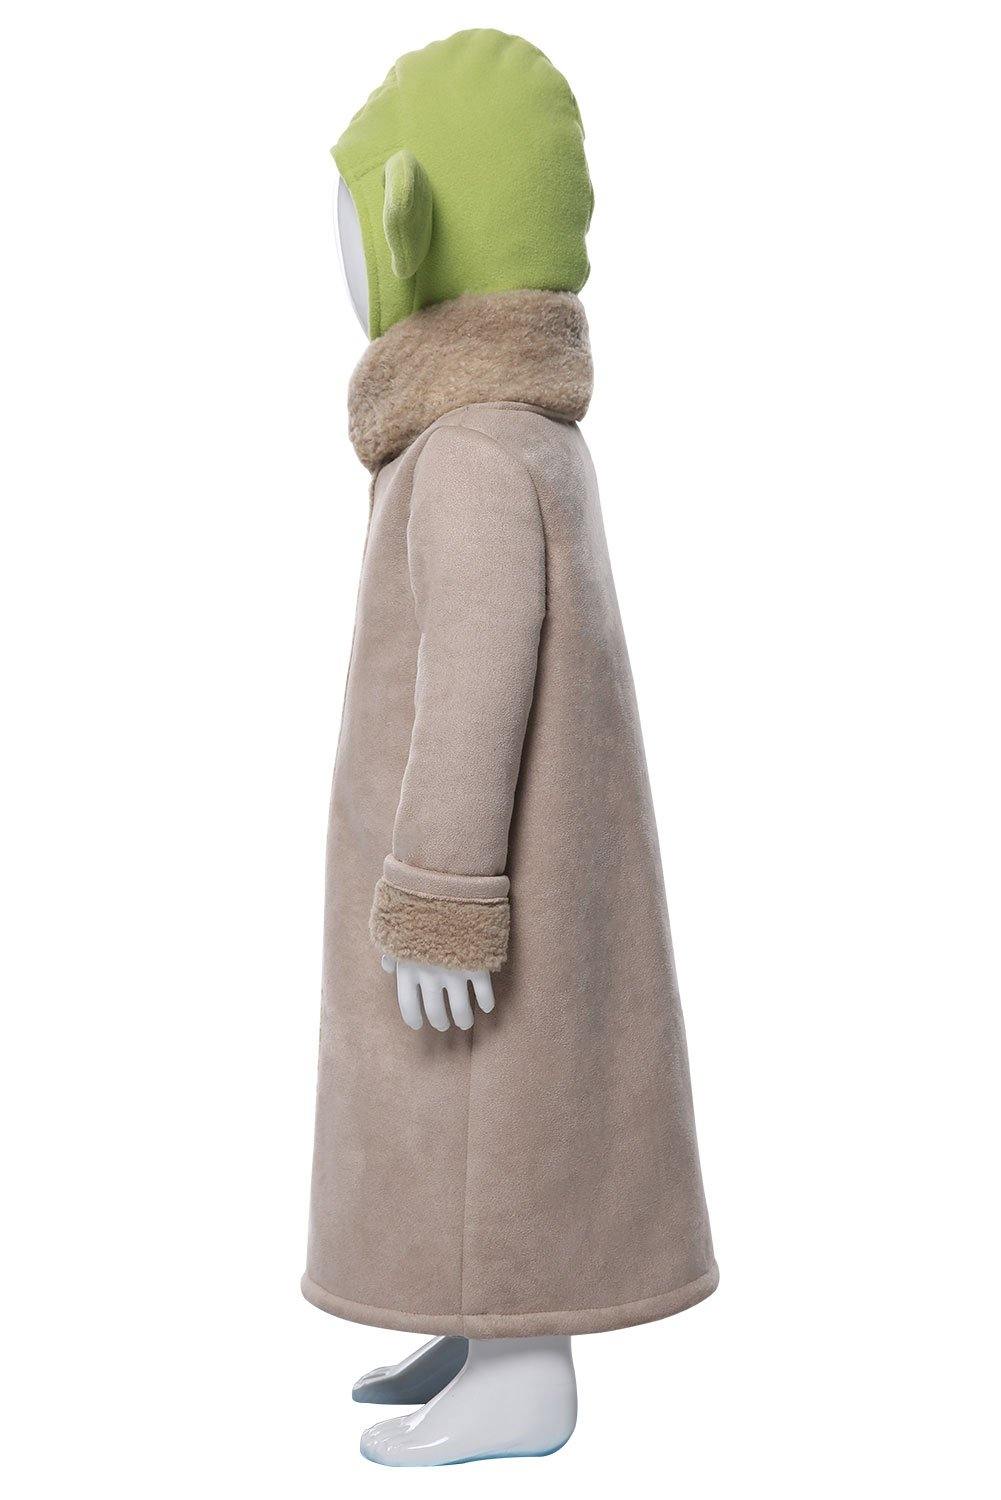 The Mandalorian Star Wars Yoda Baby Cosplay Kostüm Klein Baby - cosplaycartde